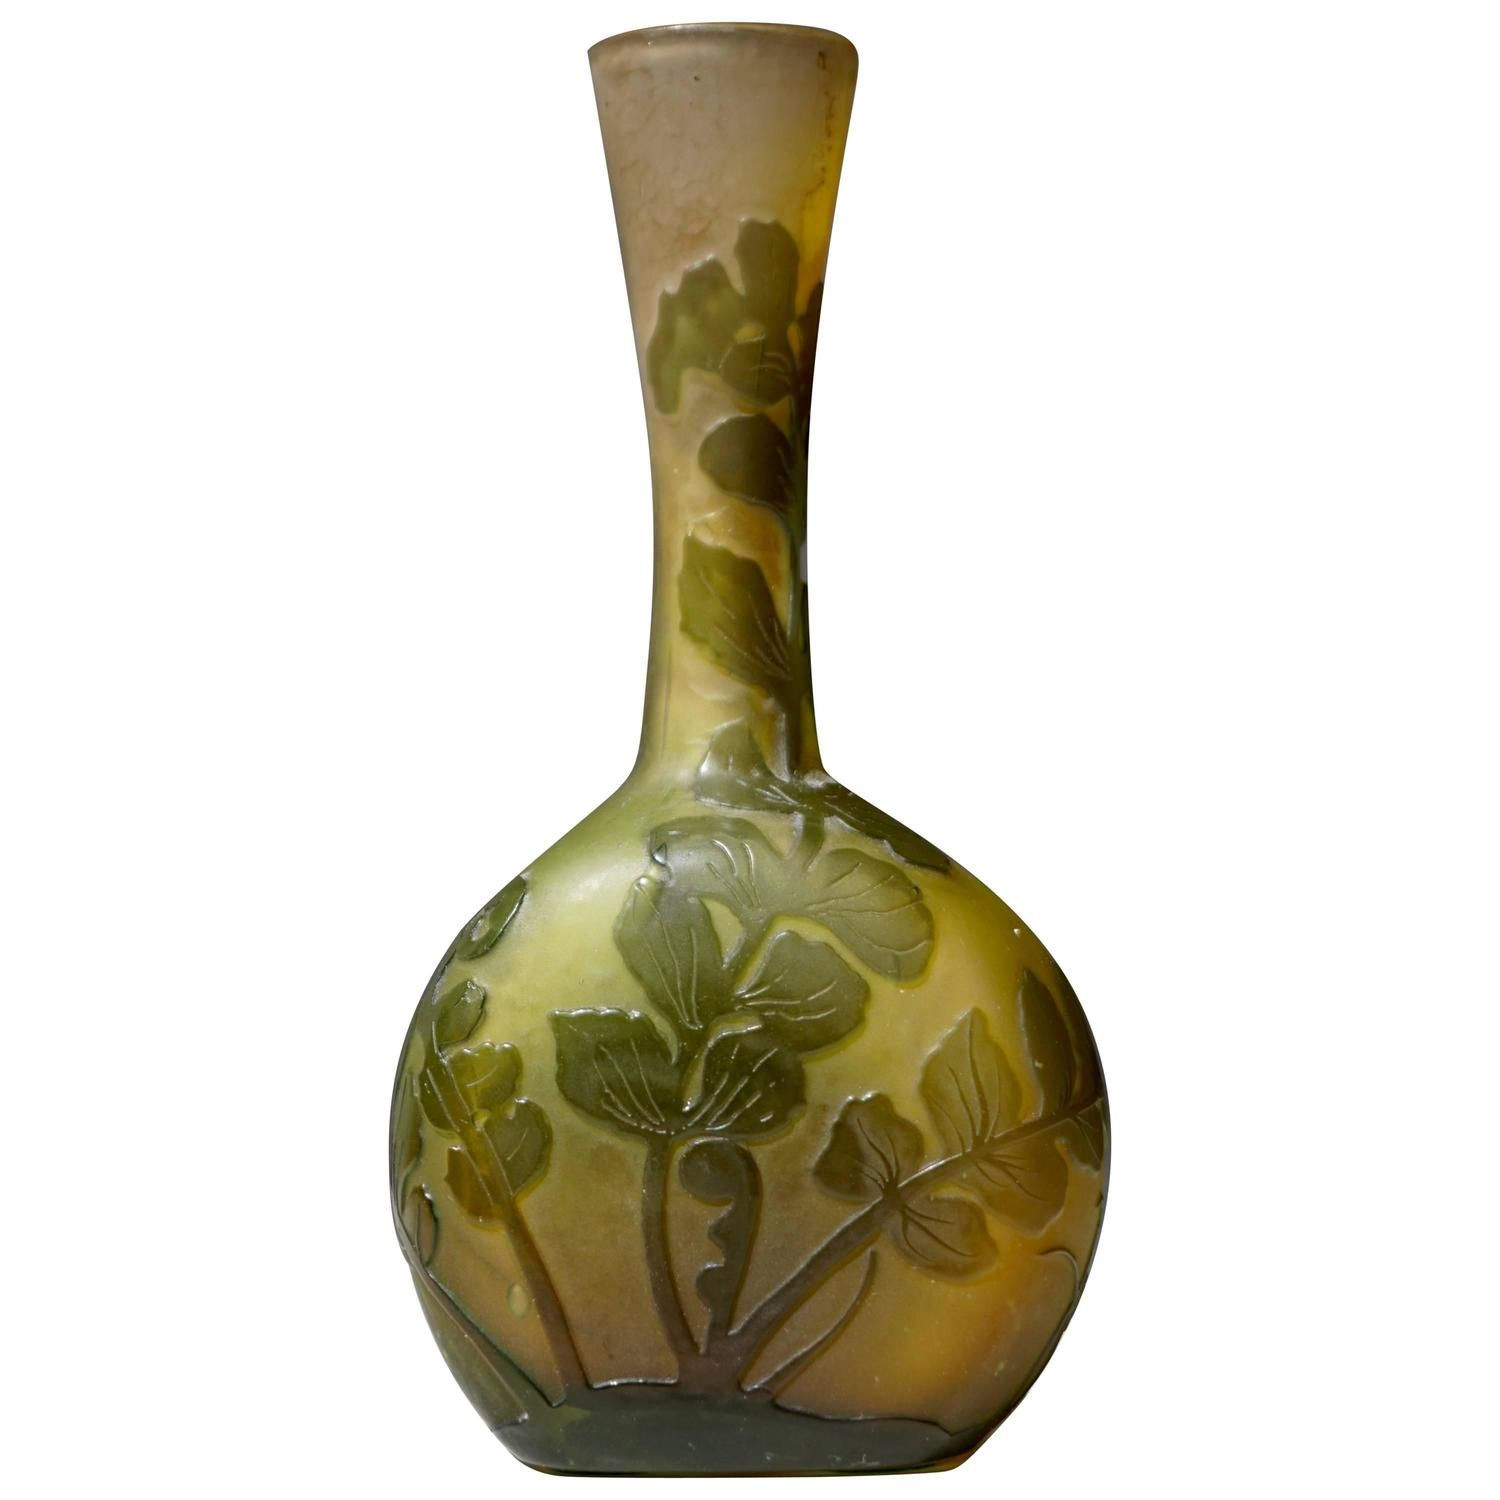 engraved glass vase of emile galla french art nouveau cameo glass vase french art with emile galla french art nouveau cameo glass vase 1stdibs com